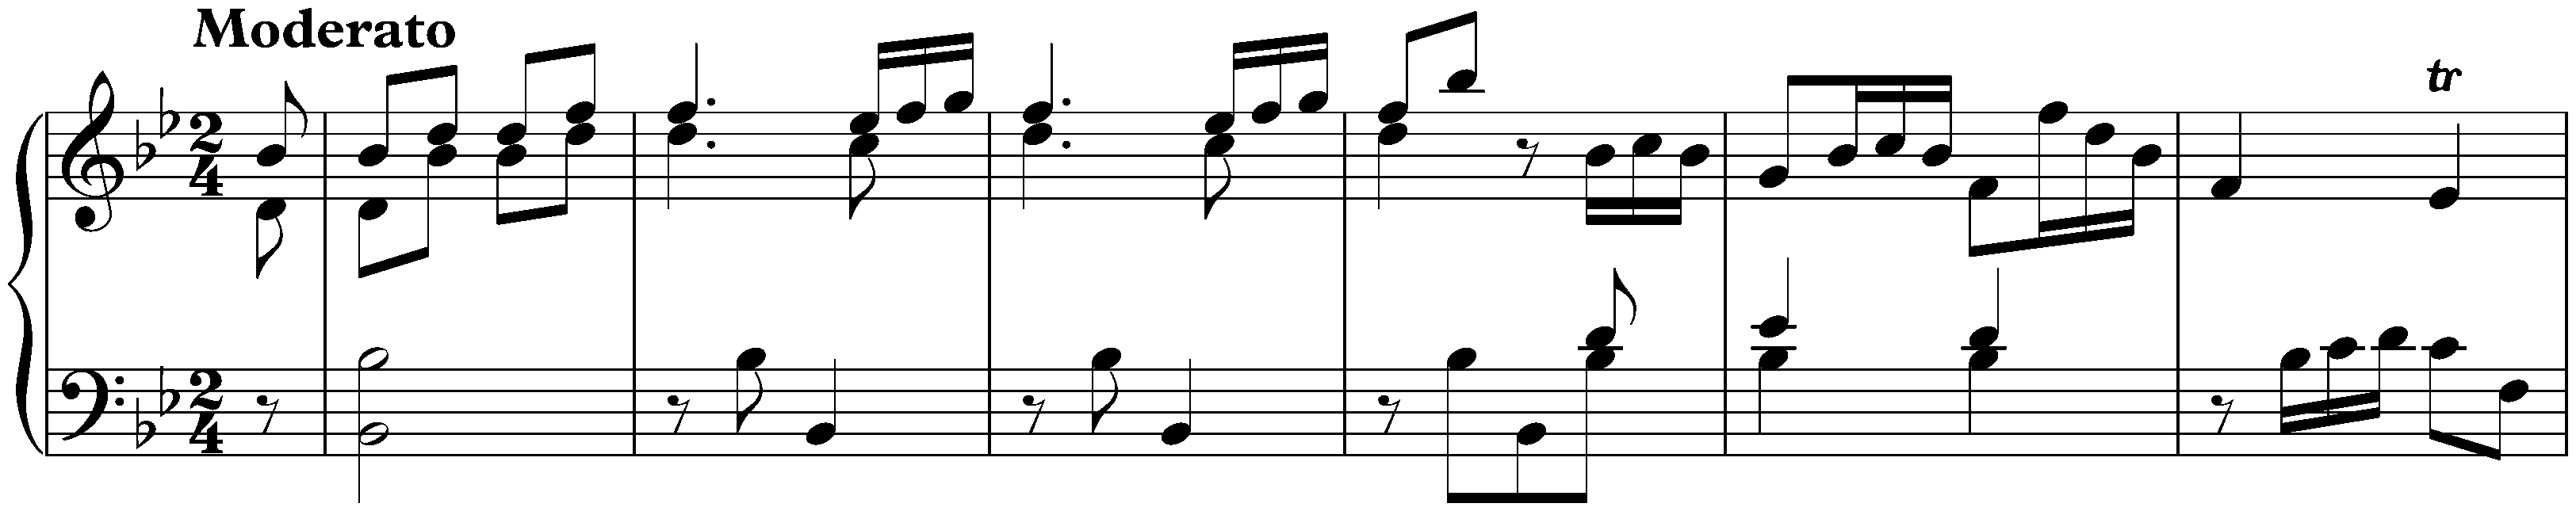 Sonata in B-flat major, Hob. XVI:2; 1. Moderato